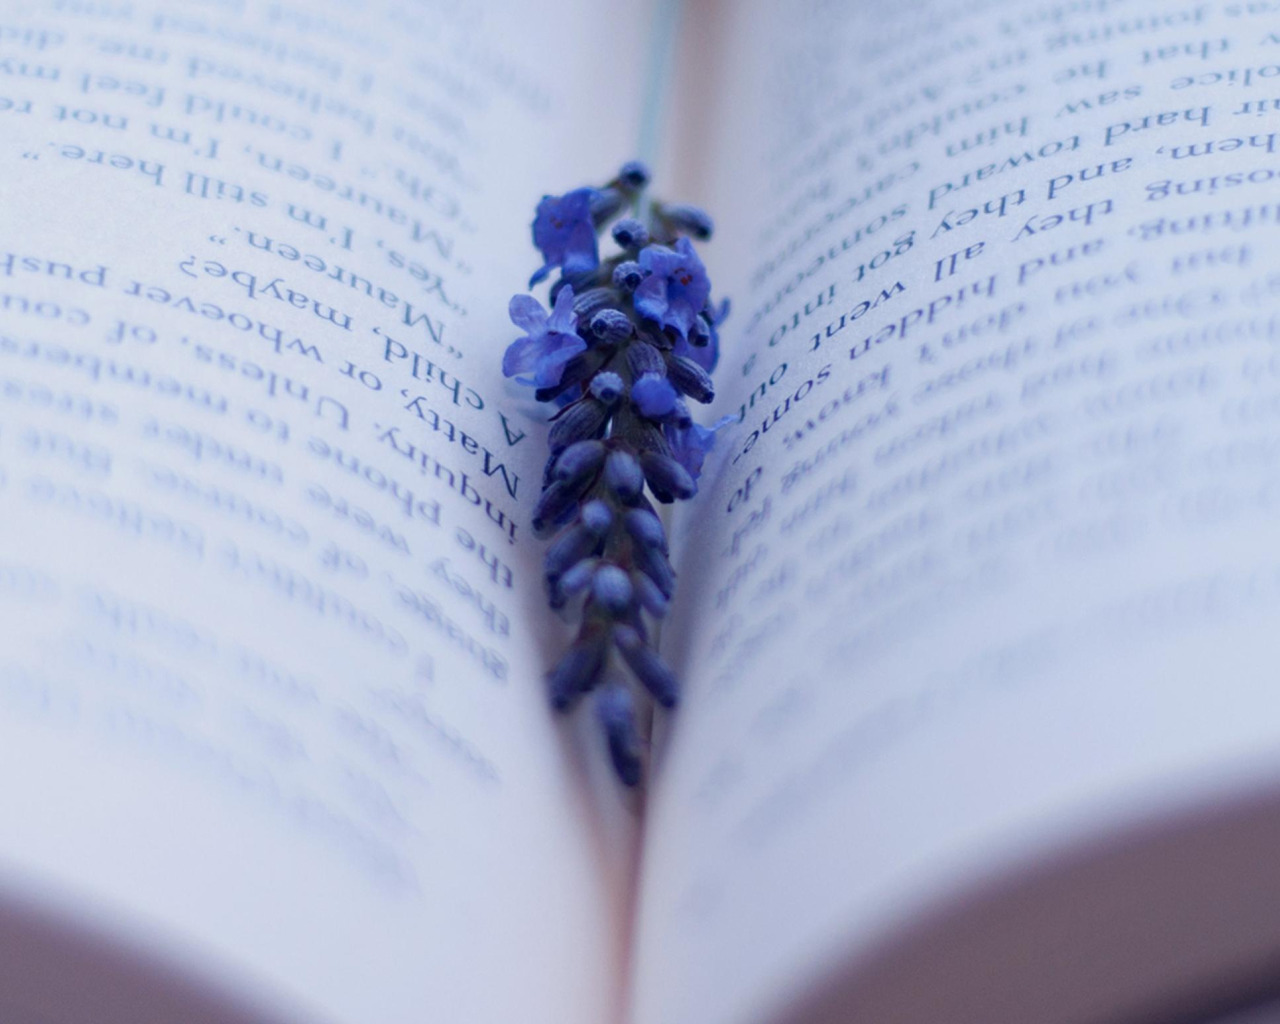 Книга фиолетовая. Голубая книга. Книга синего цвета. Лаванда и книга. Стихи сток